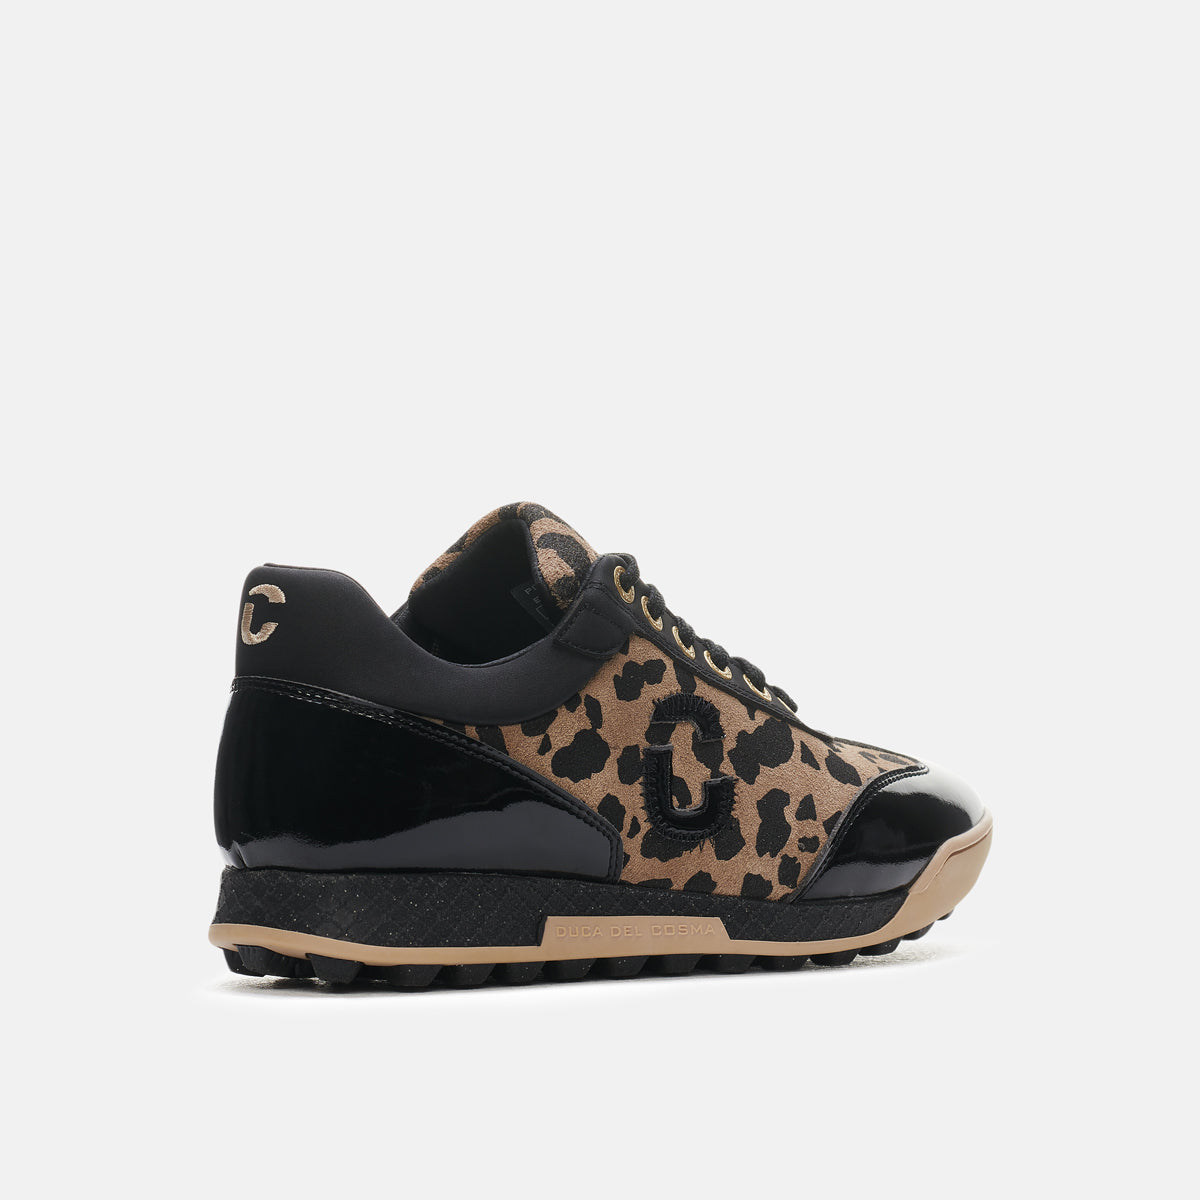 King Cheetah Black Women's Golf shoe fully waterproof with animal print from duca del cosma